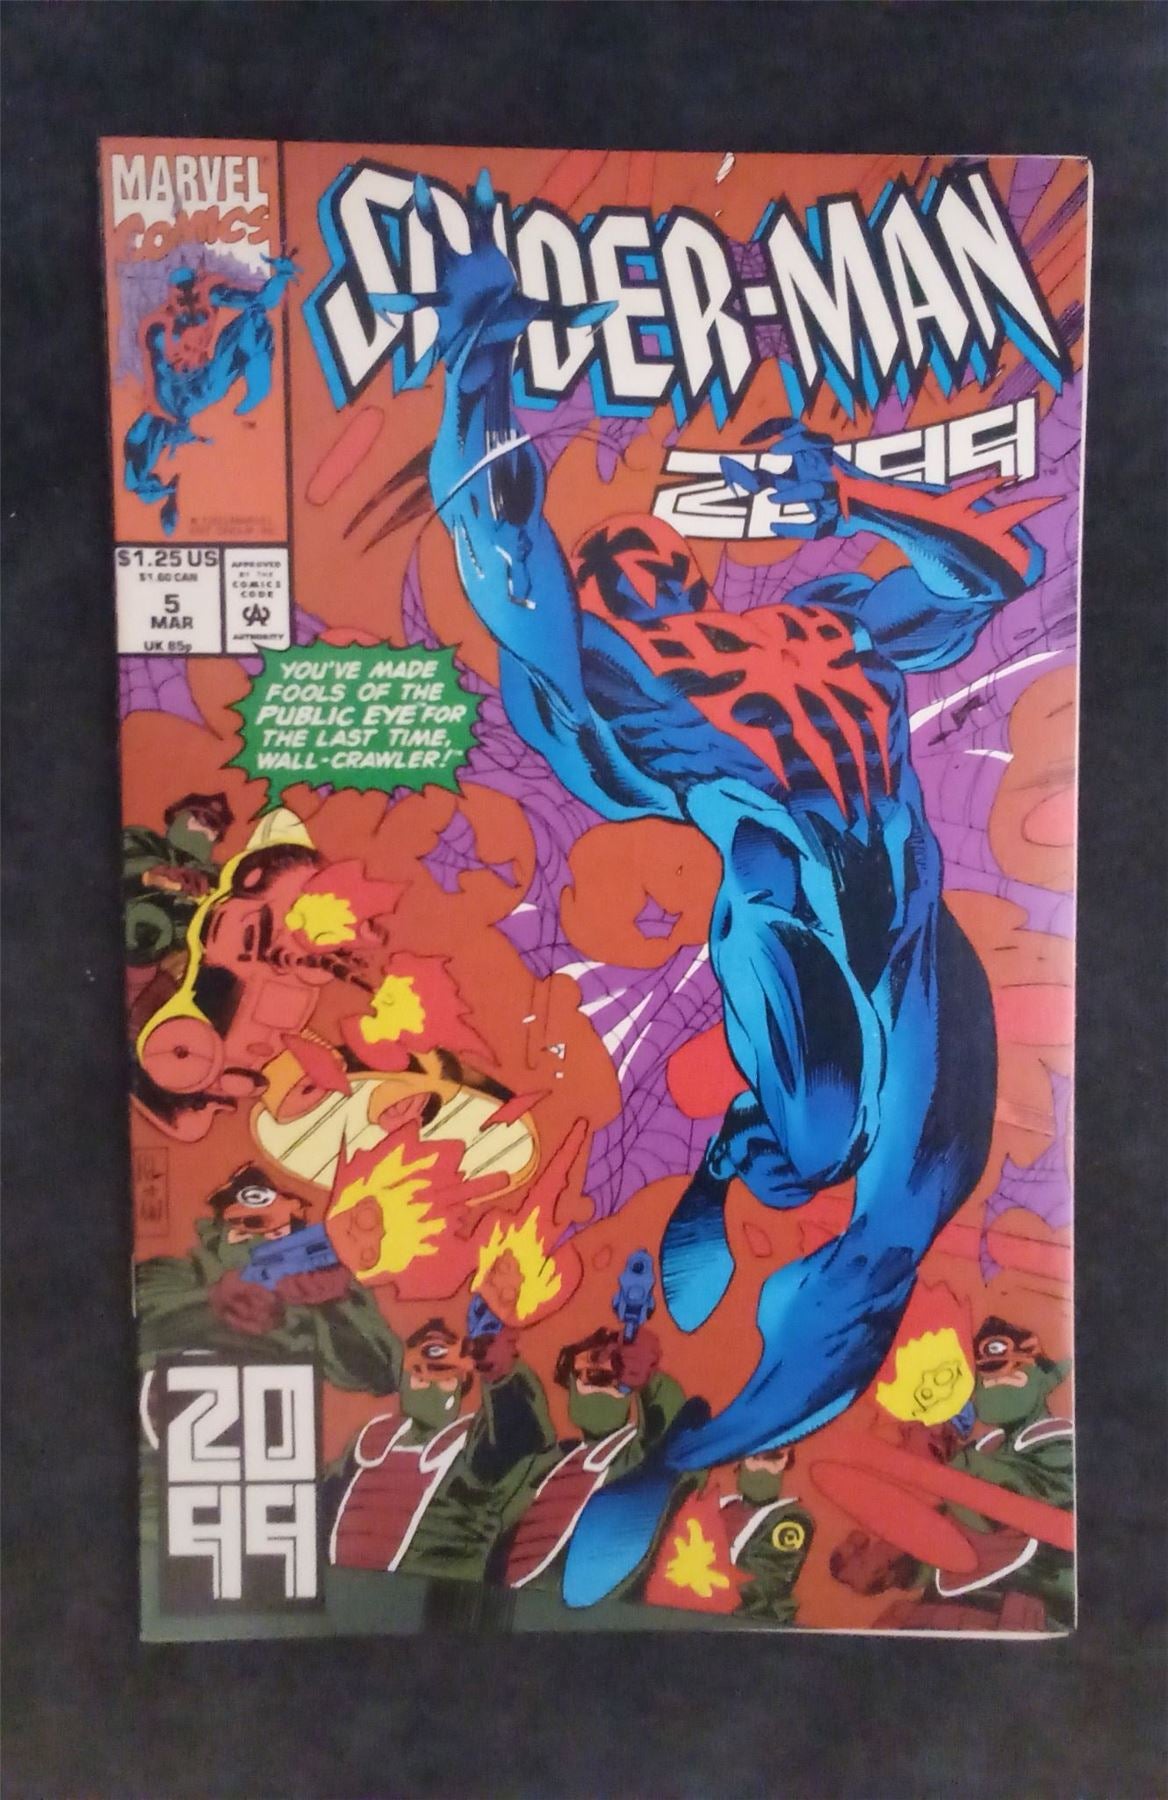 Spider-Man 2099 #5 1993 marvel Comic Book